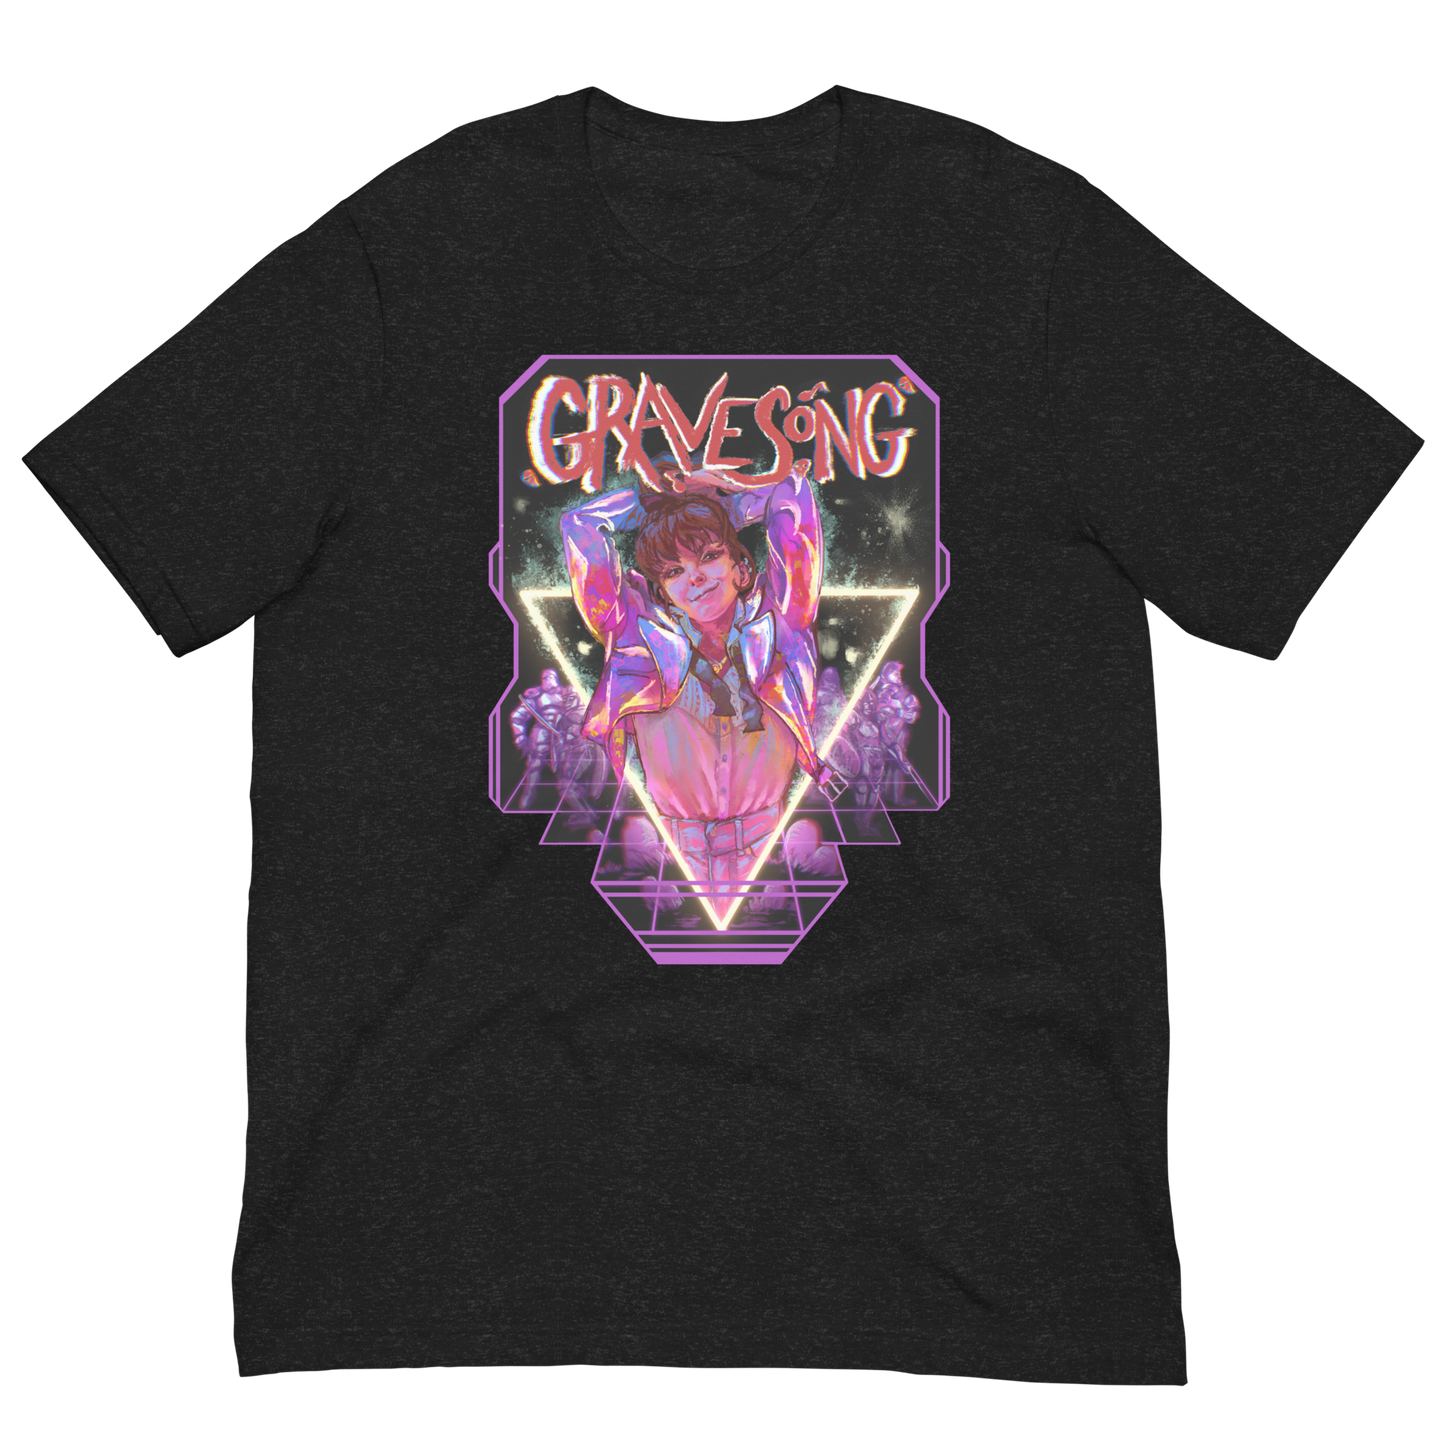 Gravesong Concert T-Shirt